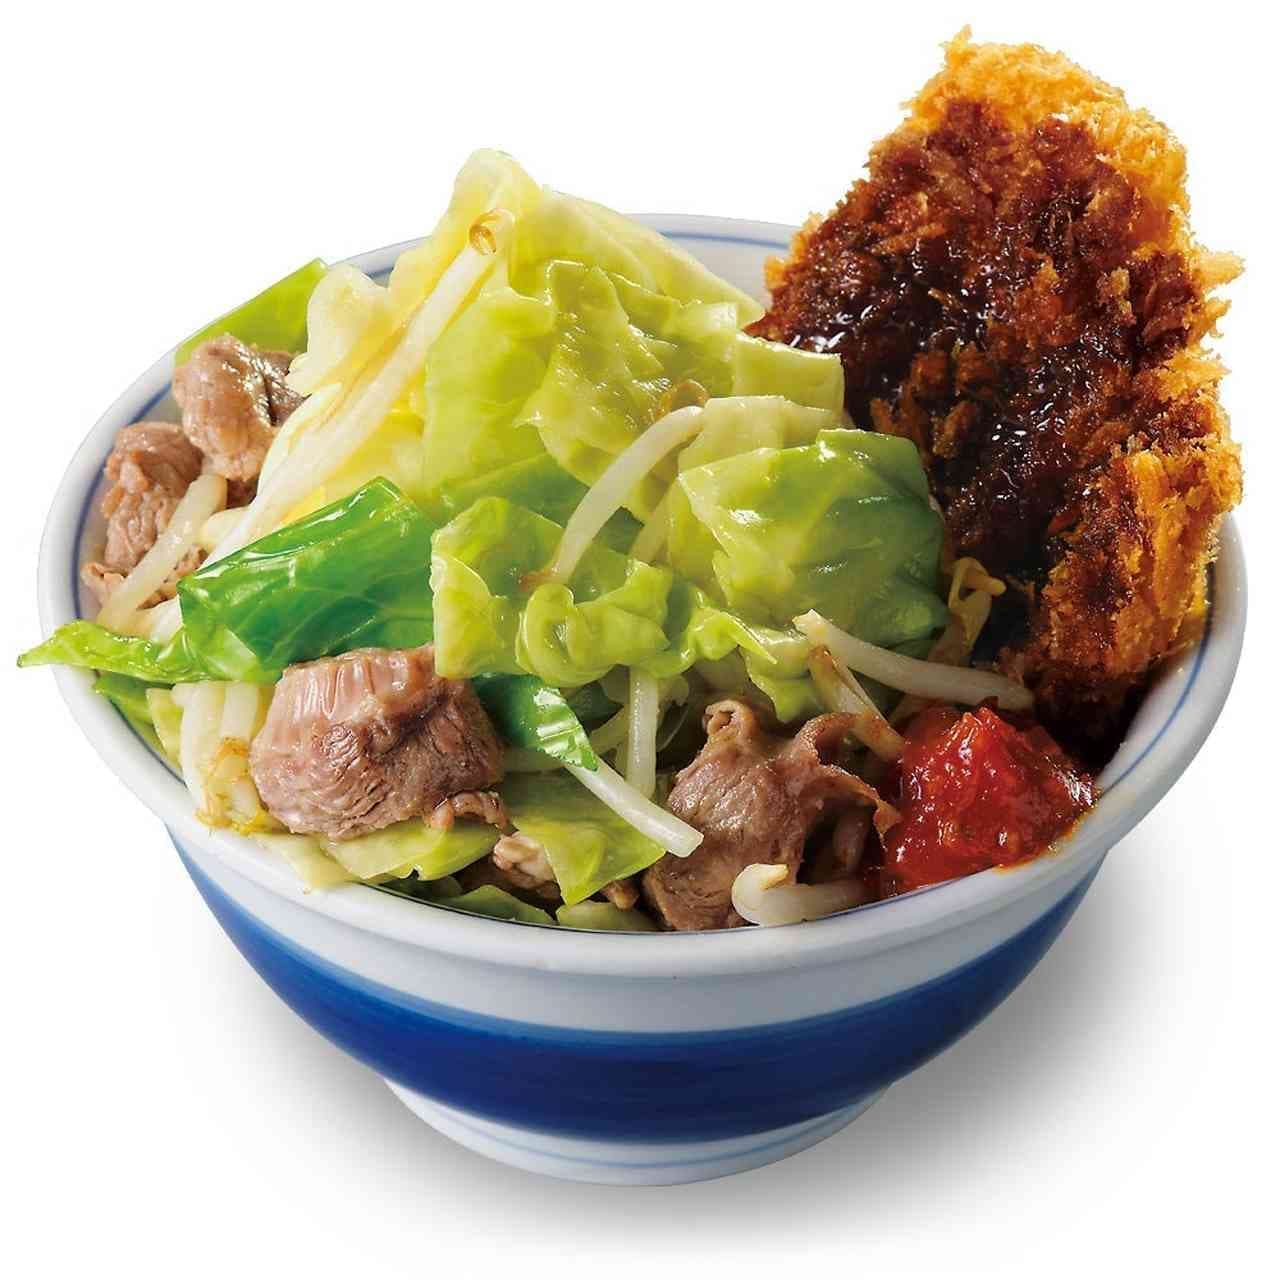 Katsuya "Stamina Stir-Fried Pork Harami and Chicken Sauce Katsu-don